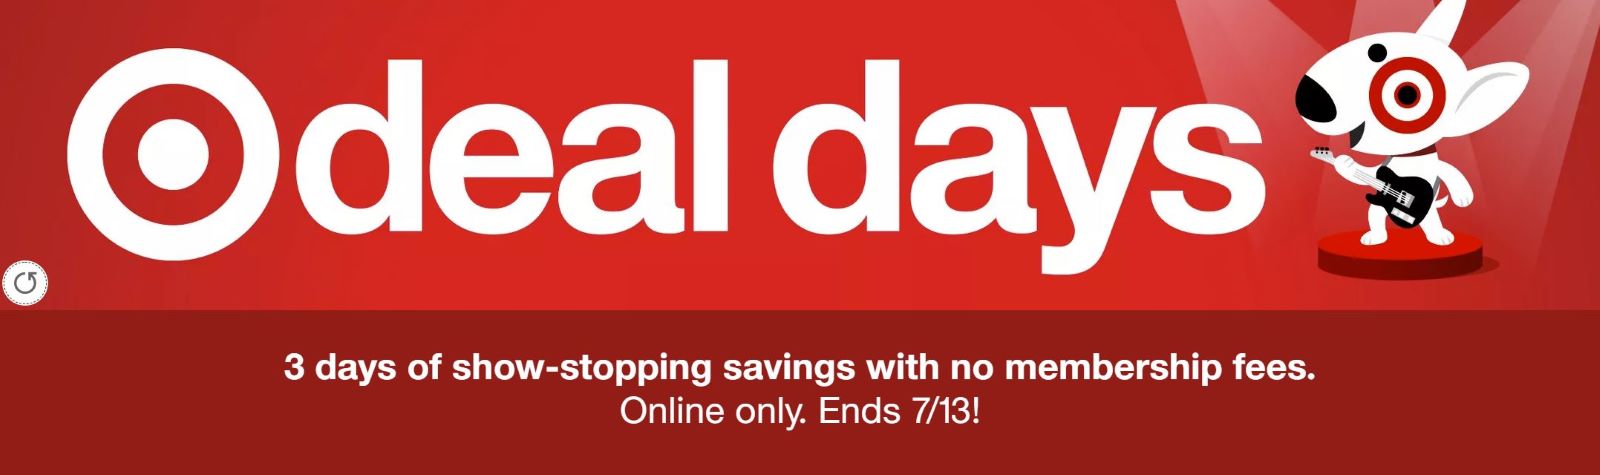 Target deal days banner